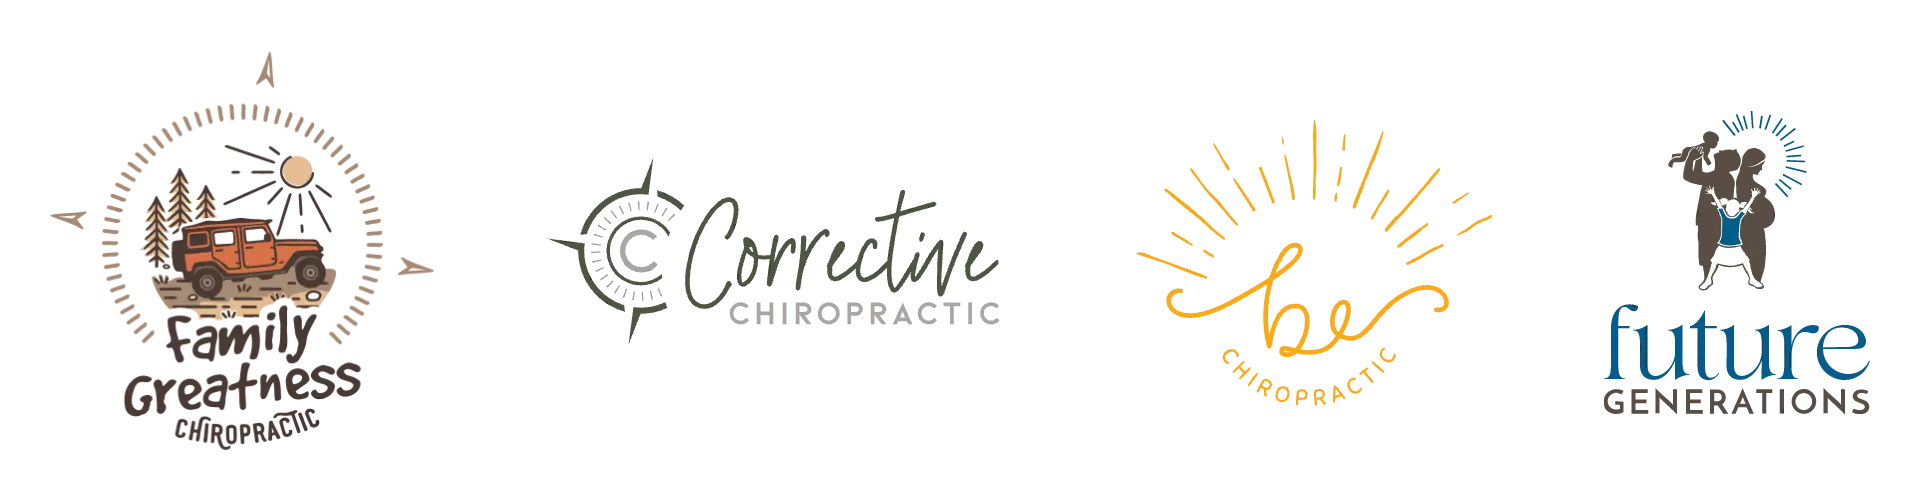 chiropractic logos